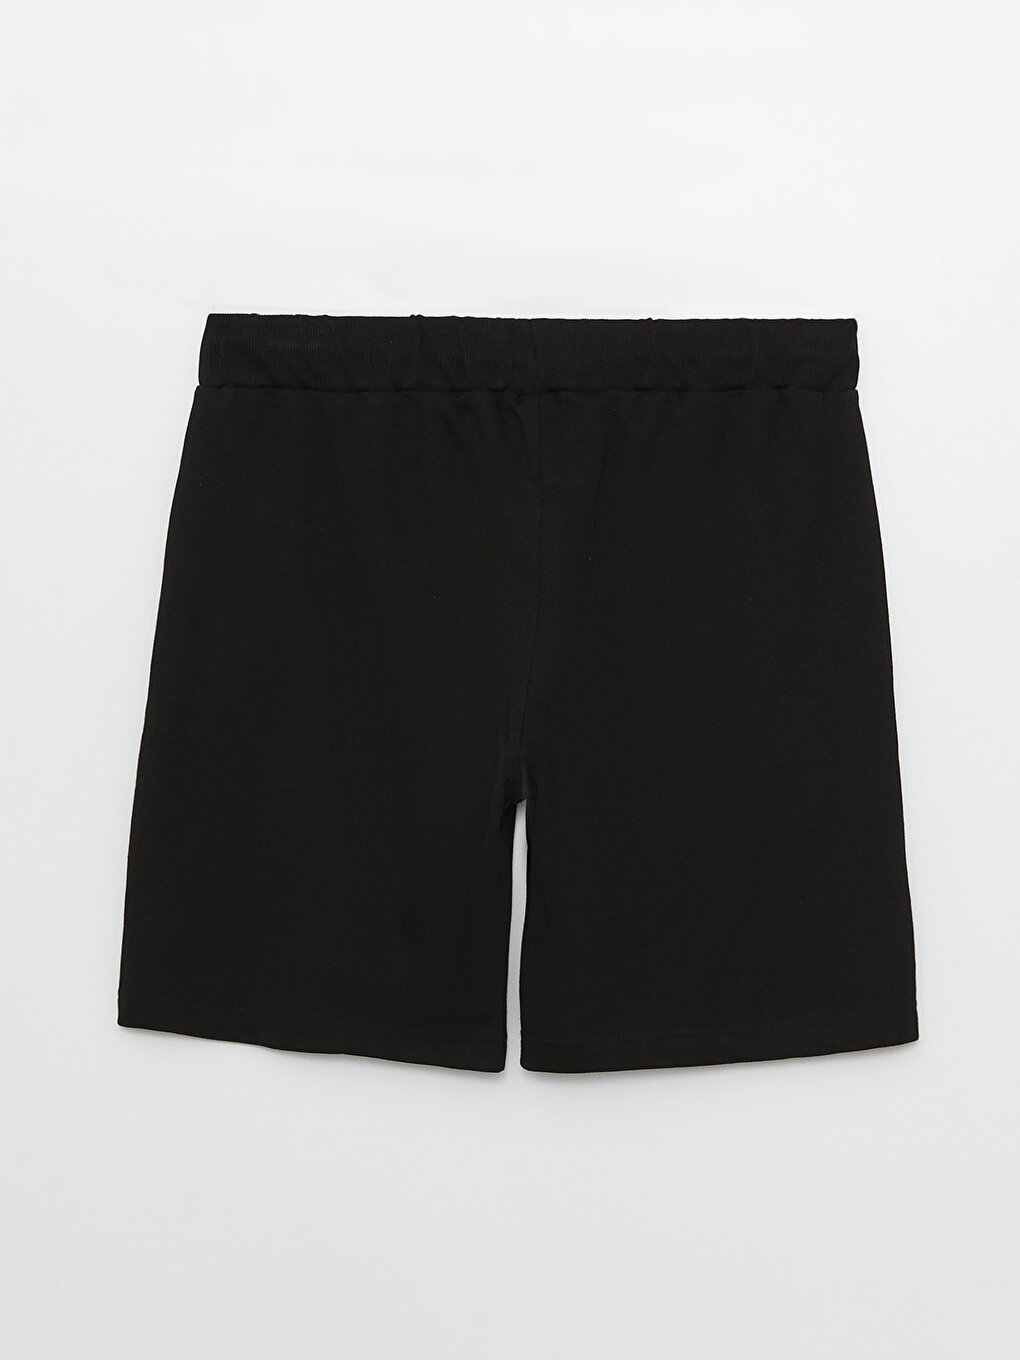 Standard Fit Men's Shorts -S3DL35Z8-CVL - S3DL35Z8-CVL - LC Waikiki